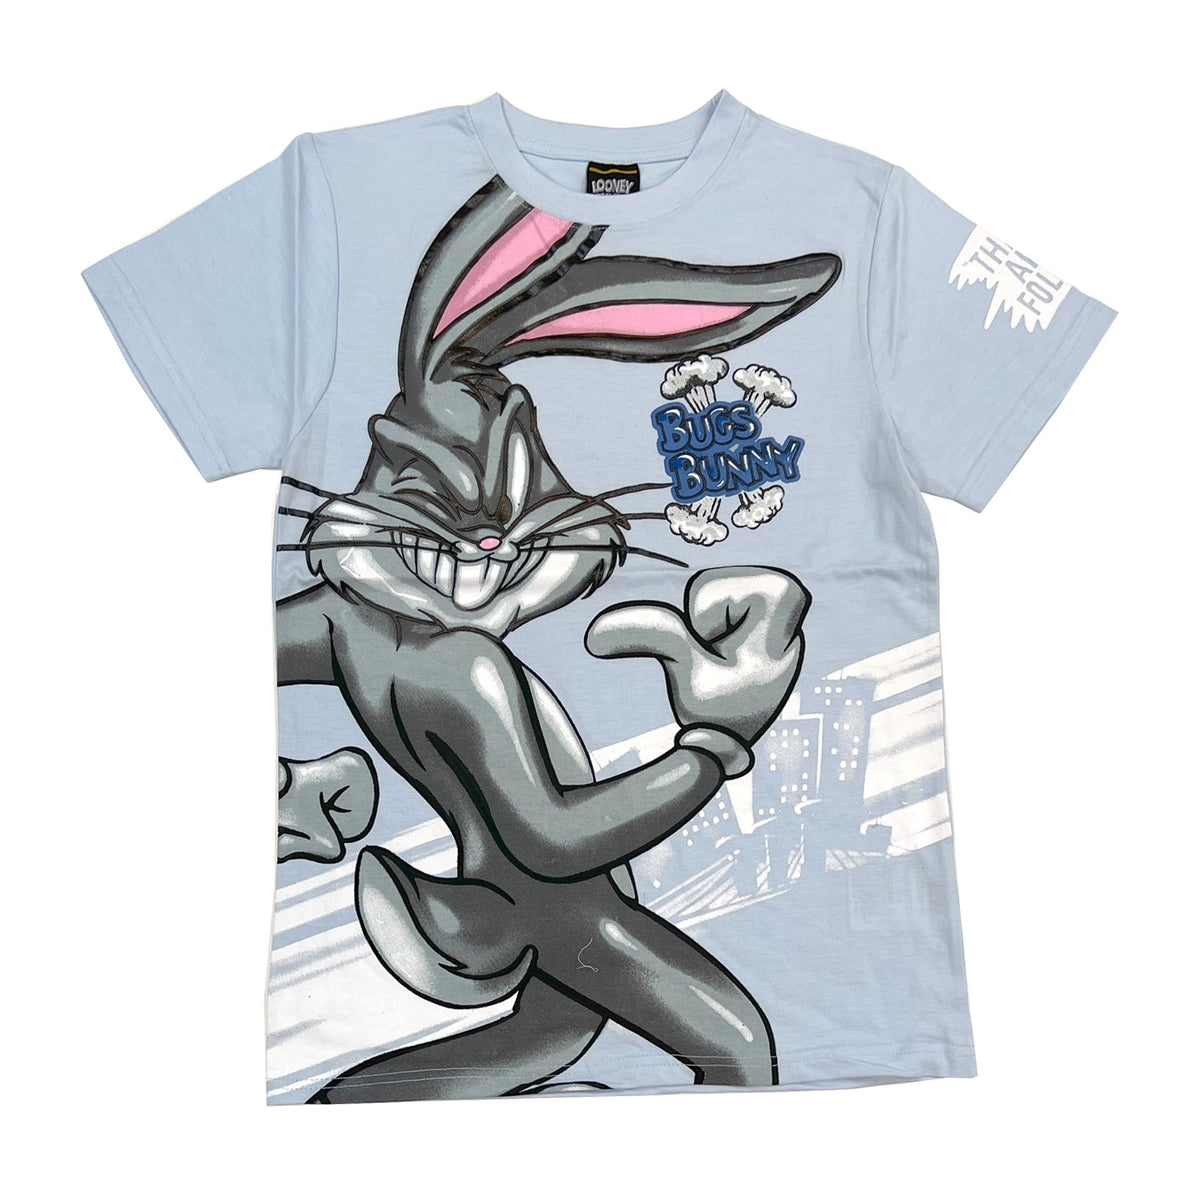 Looney Tunes Bugs Bunny Gel Print Tee (Light Blue) / $16.99 2 for $30